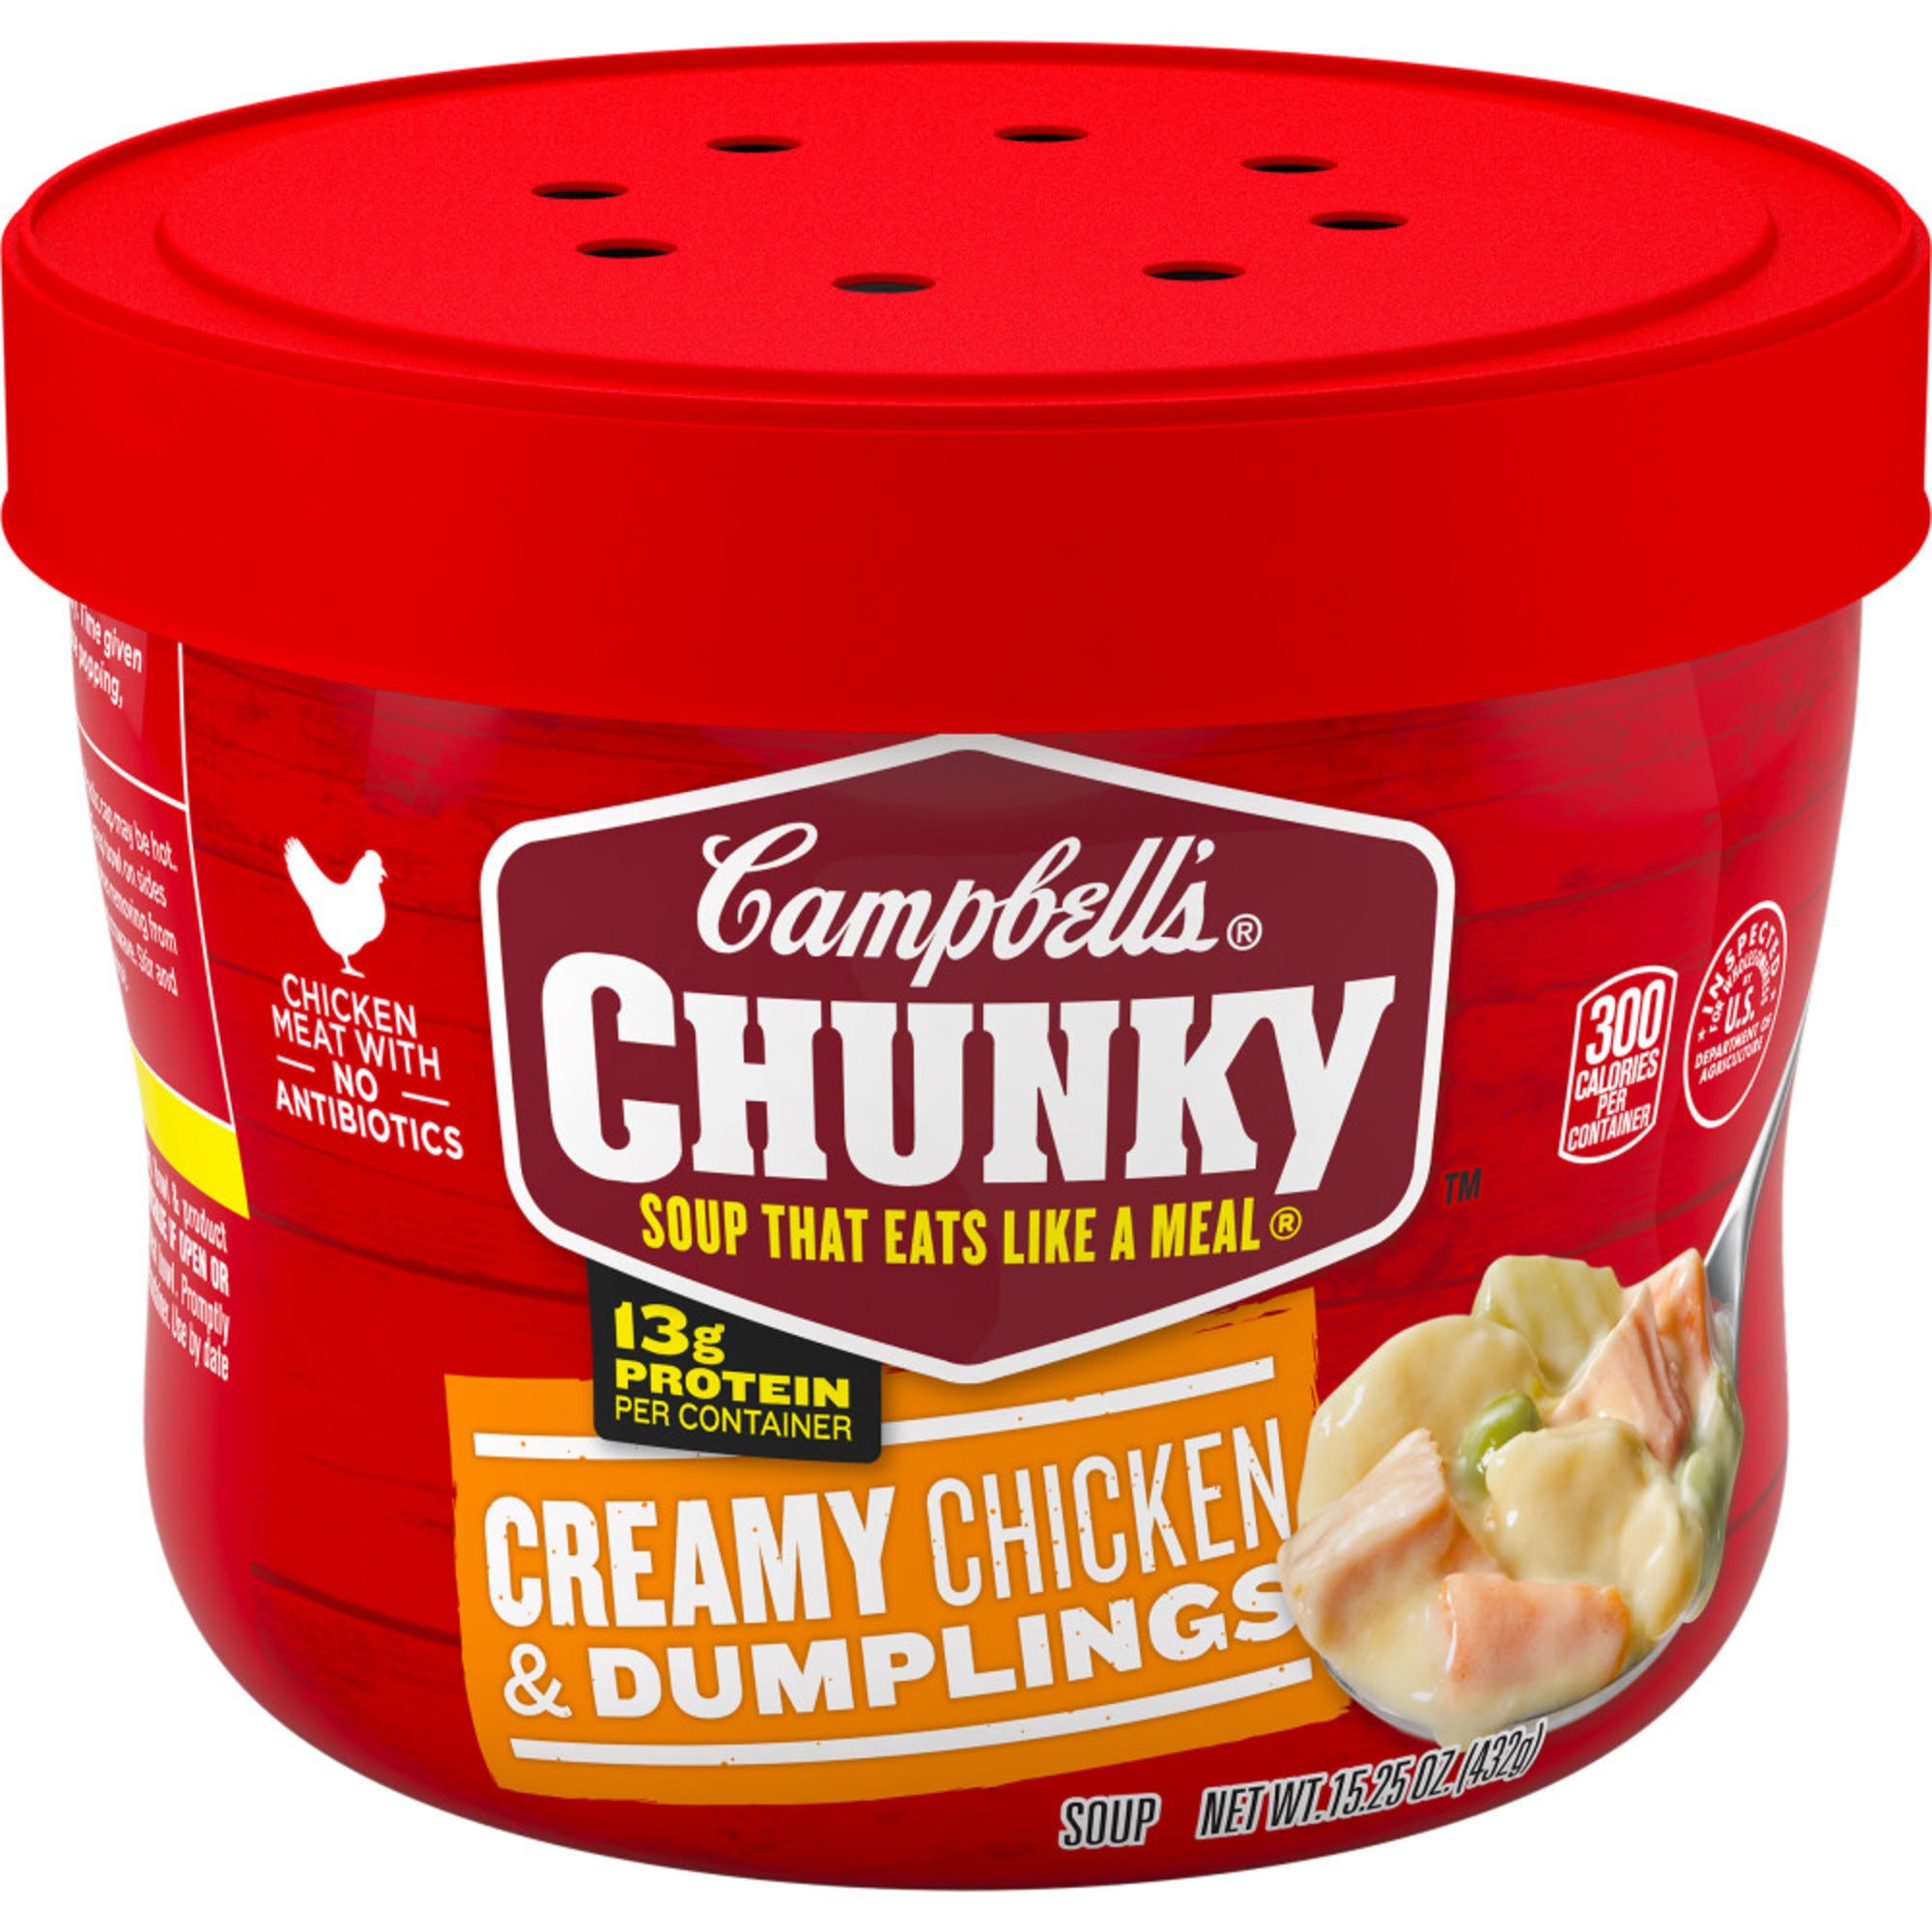 Campbells Chunky Soup, Creamy Chicken & Dumplings - 15.25 oz